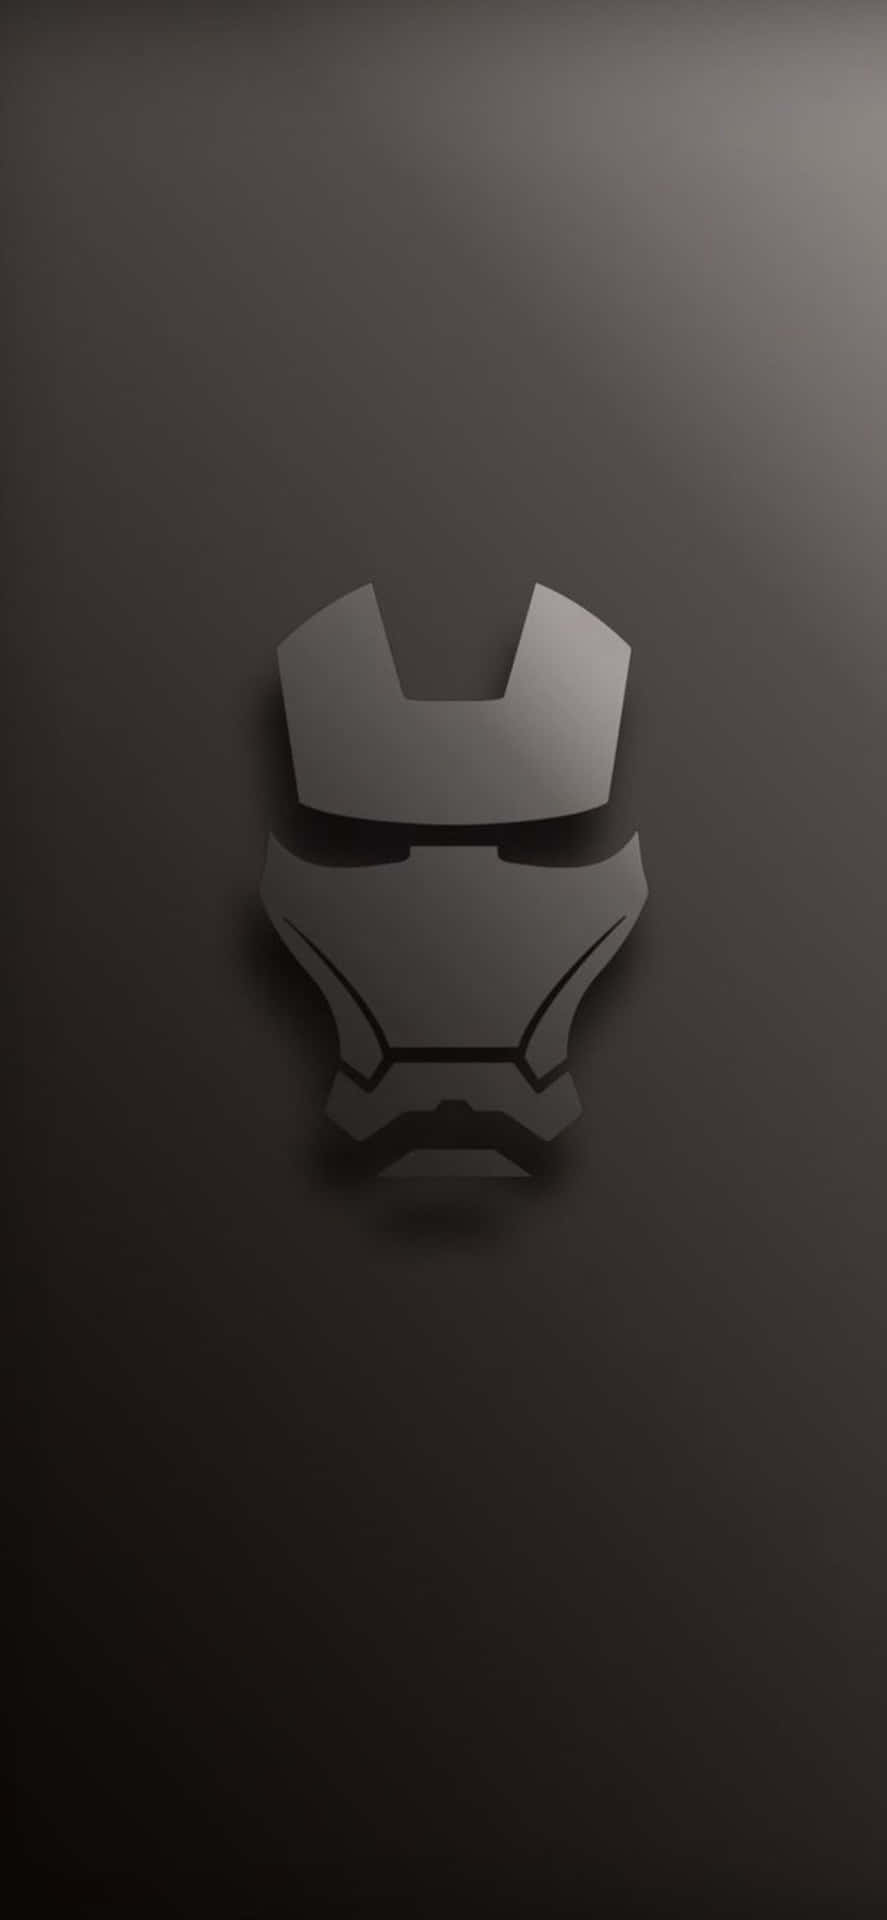 Llevaa Iron Man Contigo Descargando La Versión 4k Para Dispositivos Móviles. Fondo de pantalla